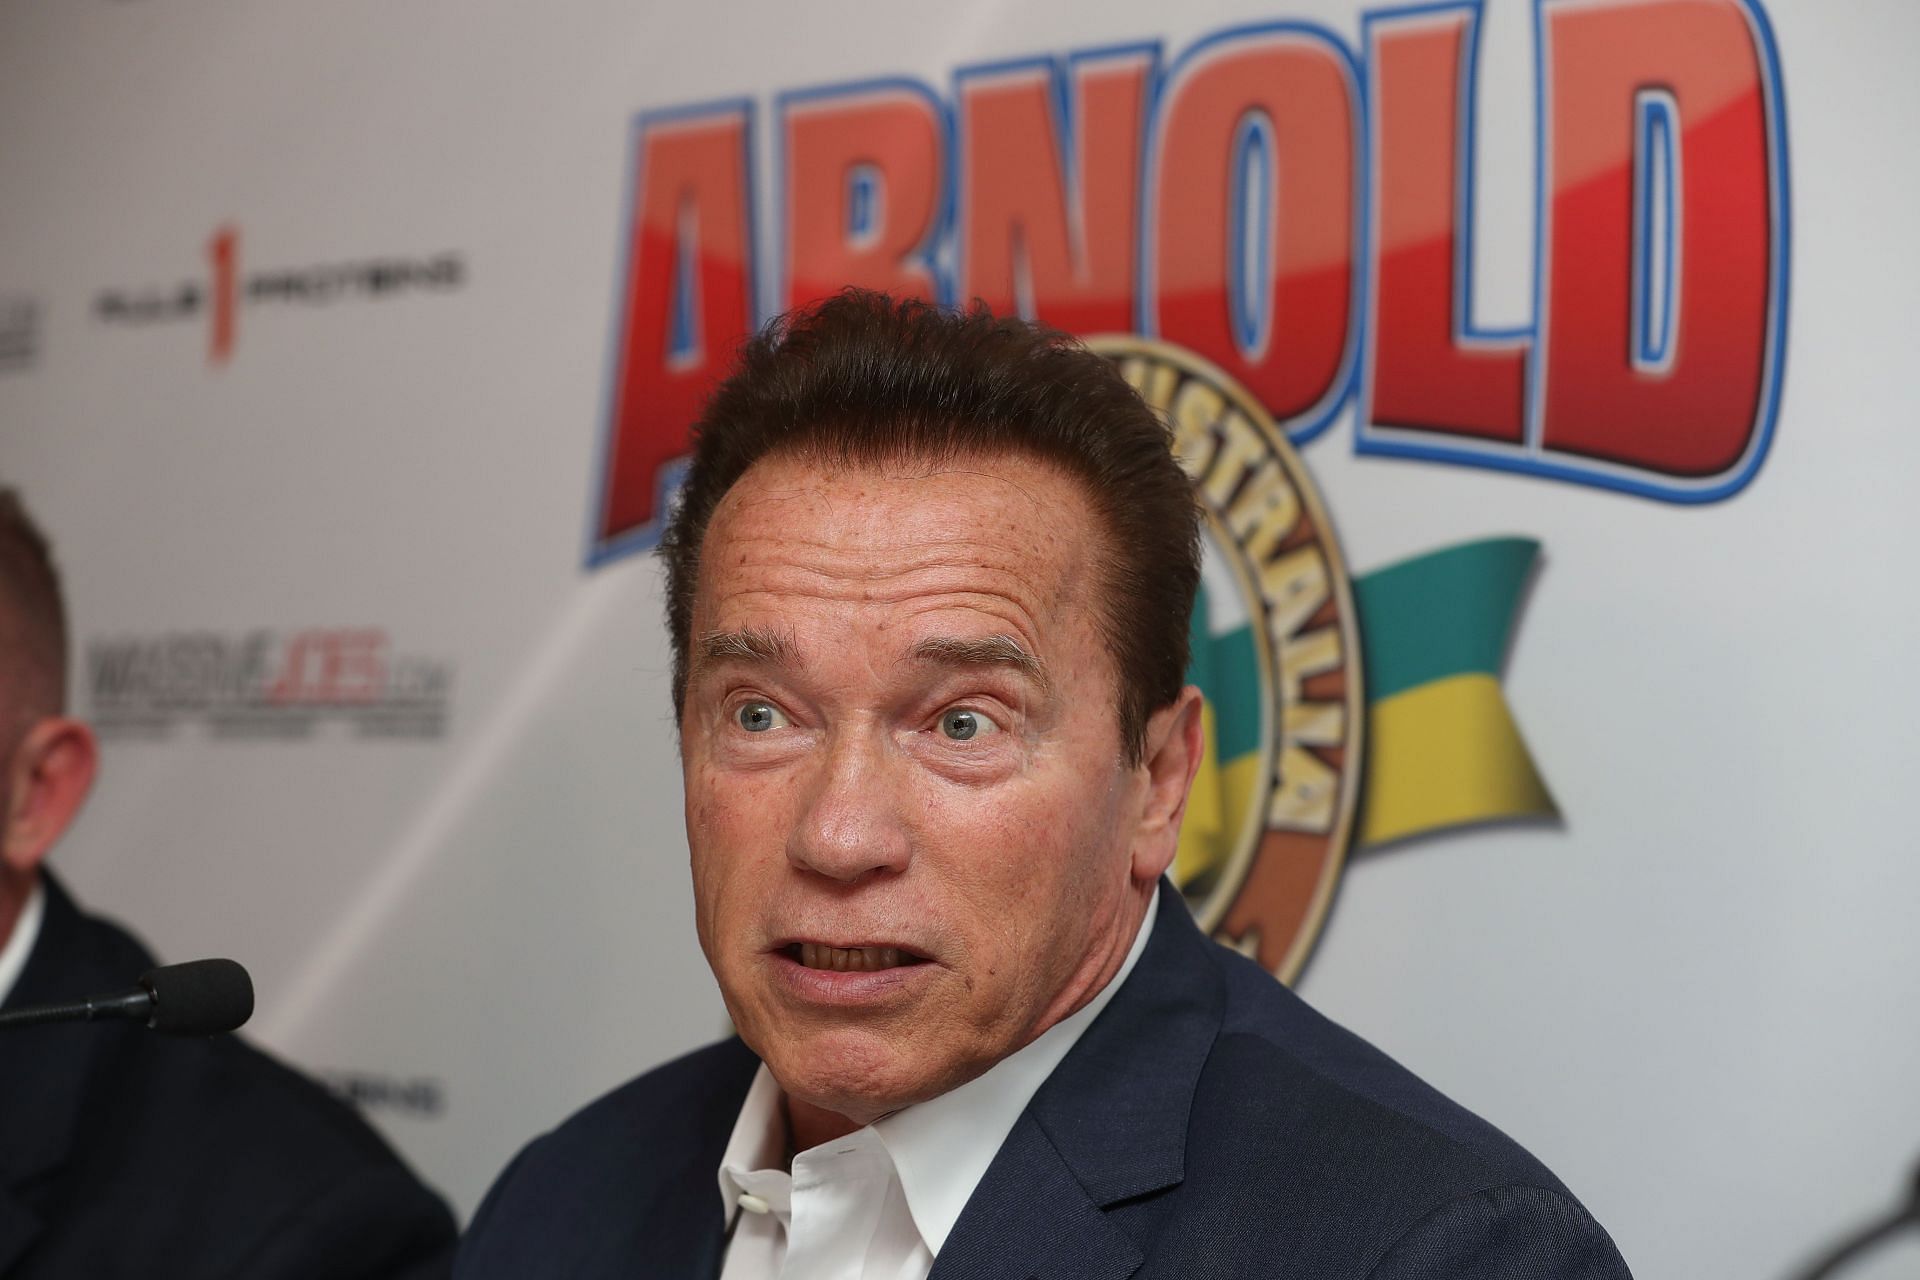 Arnold Schwarzenegger News Conference